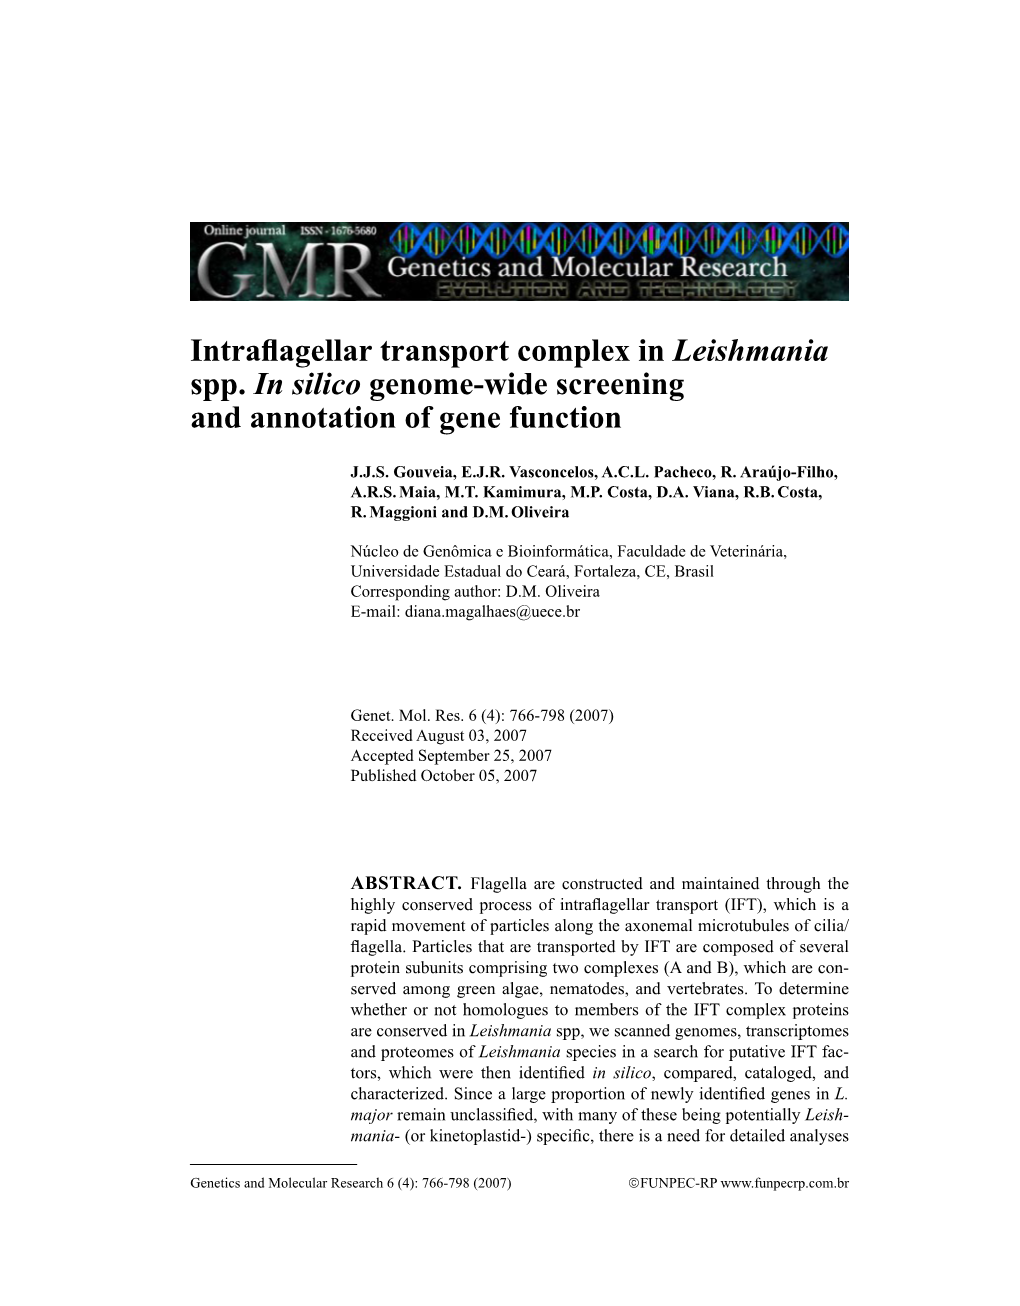 Intraflagellar Transport Complex in Leishmania Spp. in Silico Genome